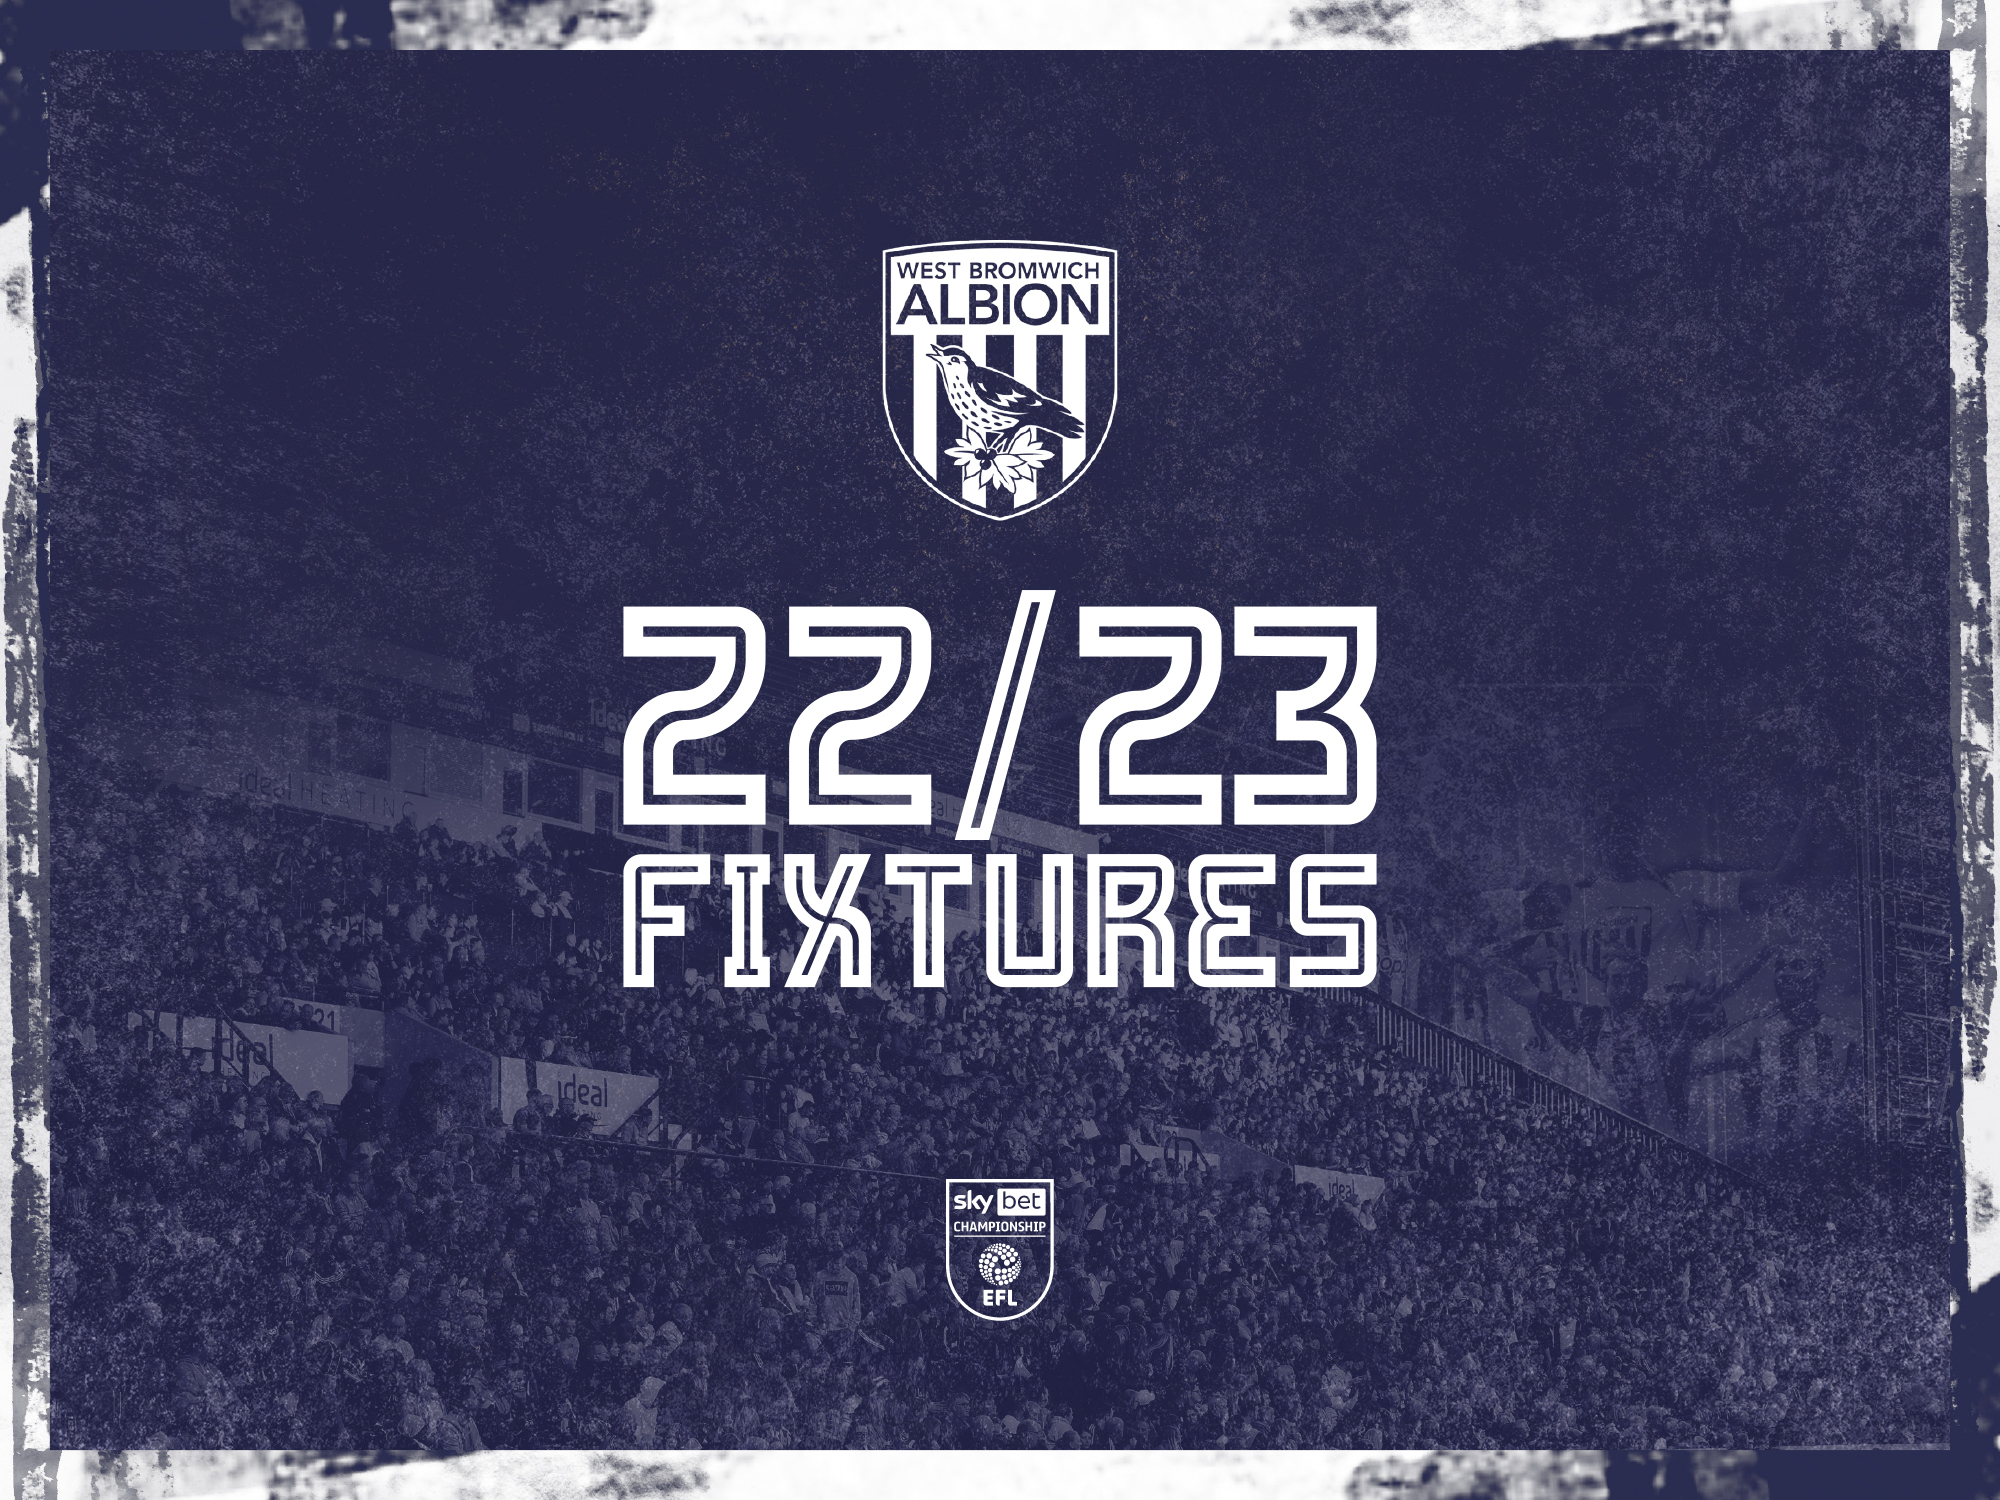 22/23 Fixtures unveiled